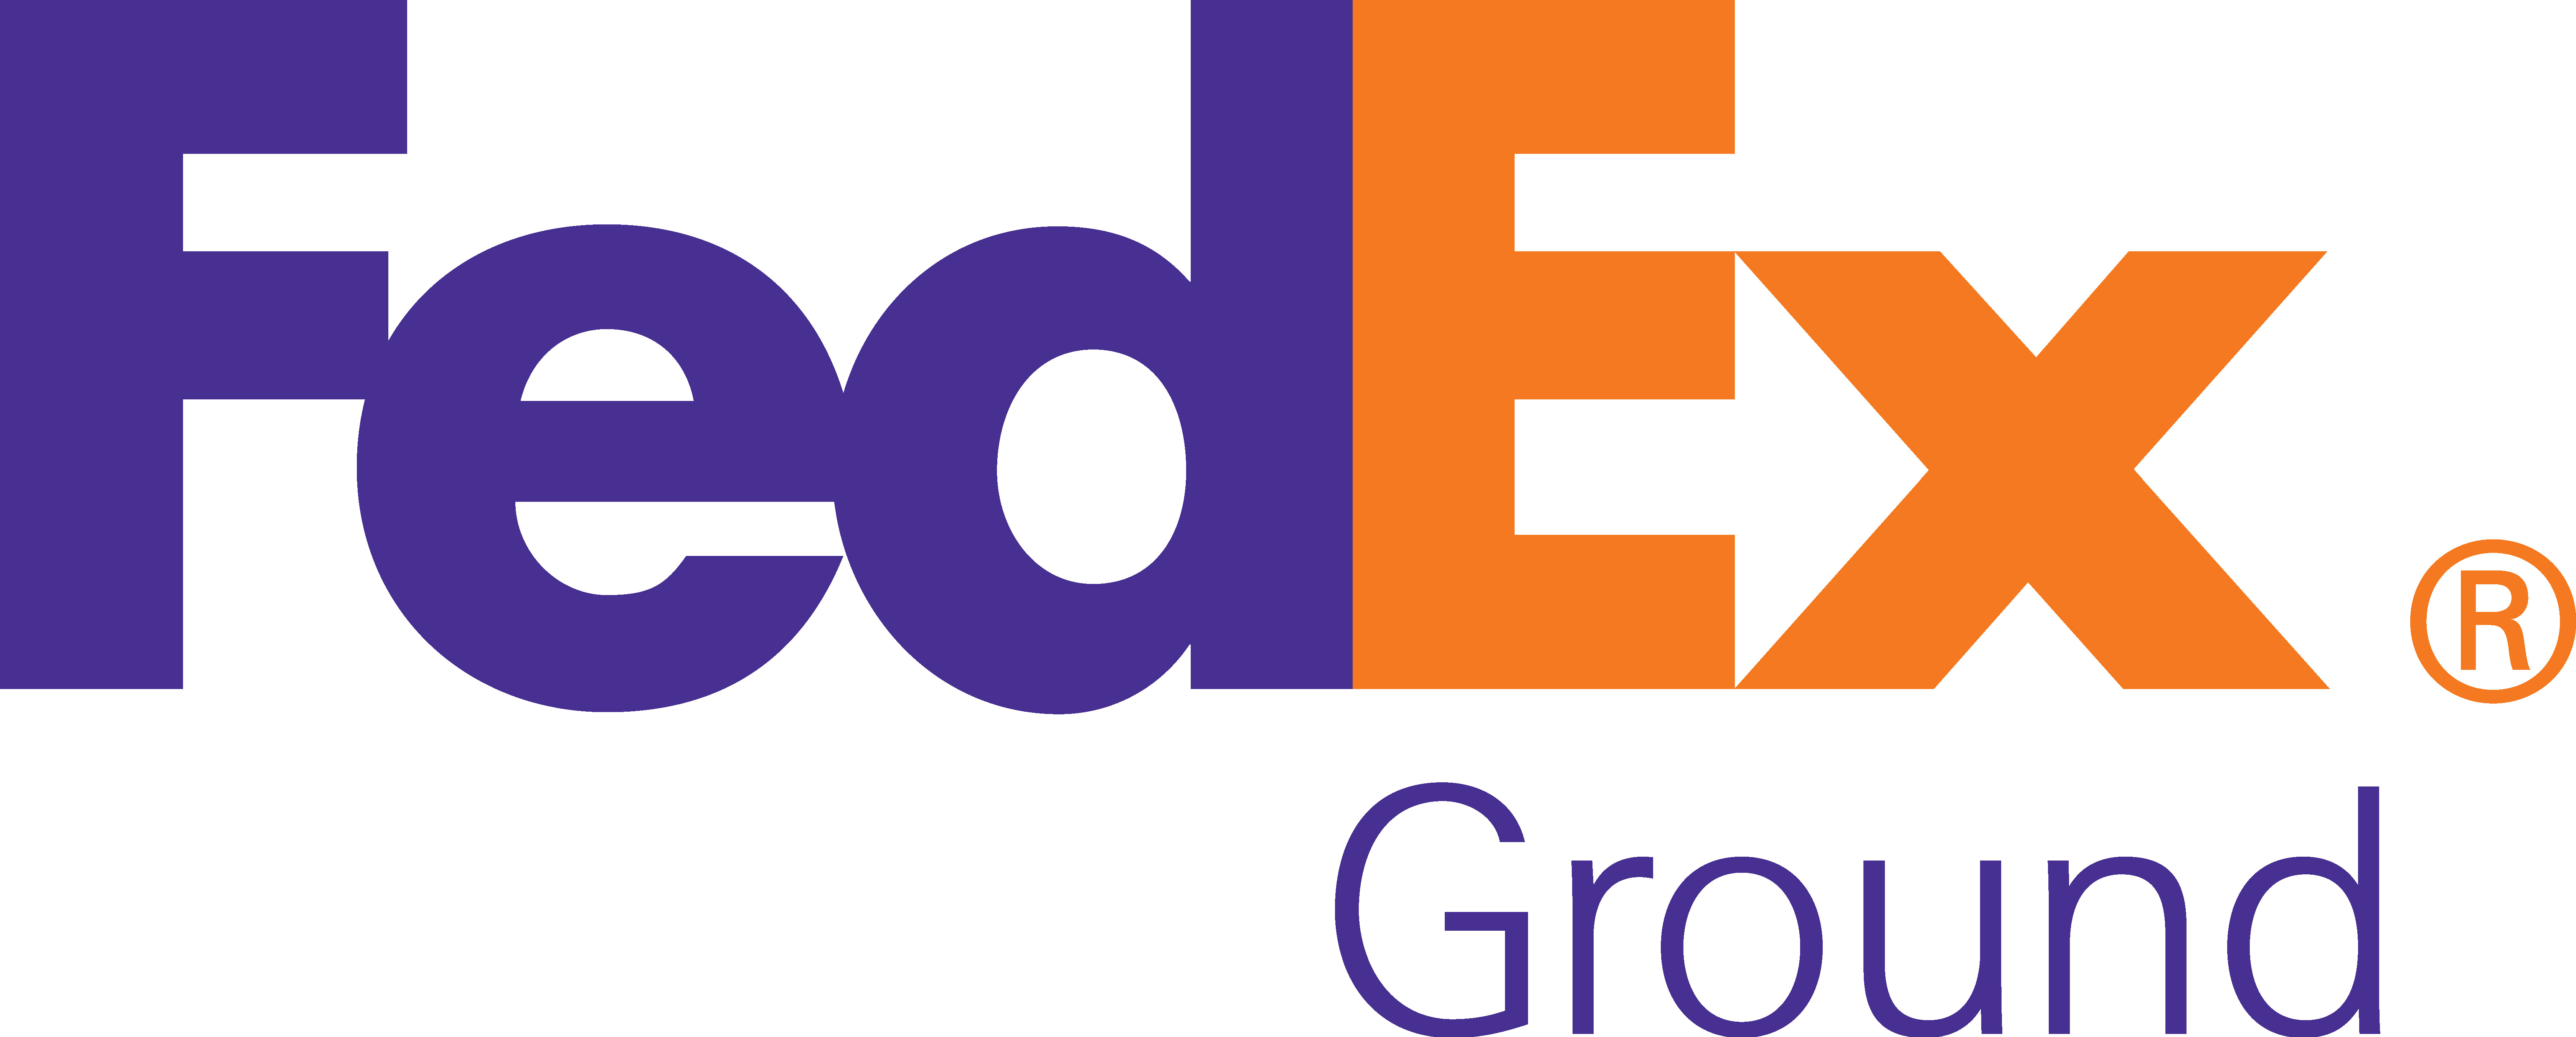 4e. FedEx (Regional)